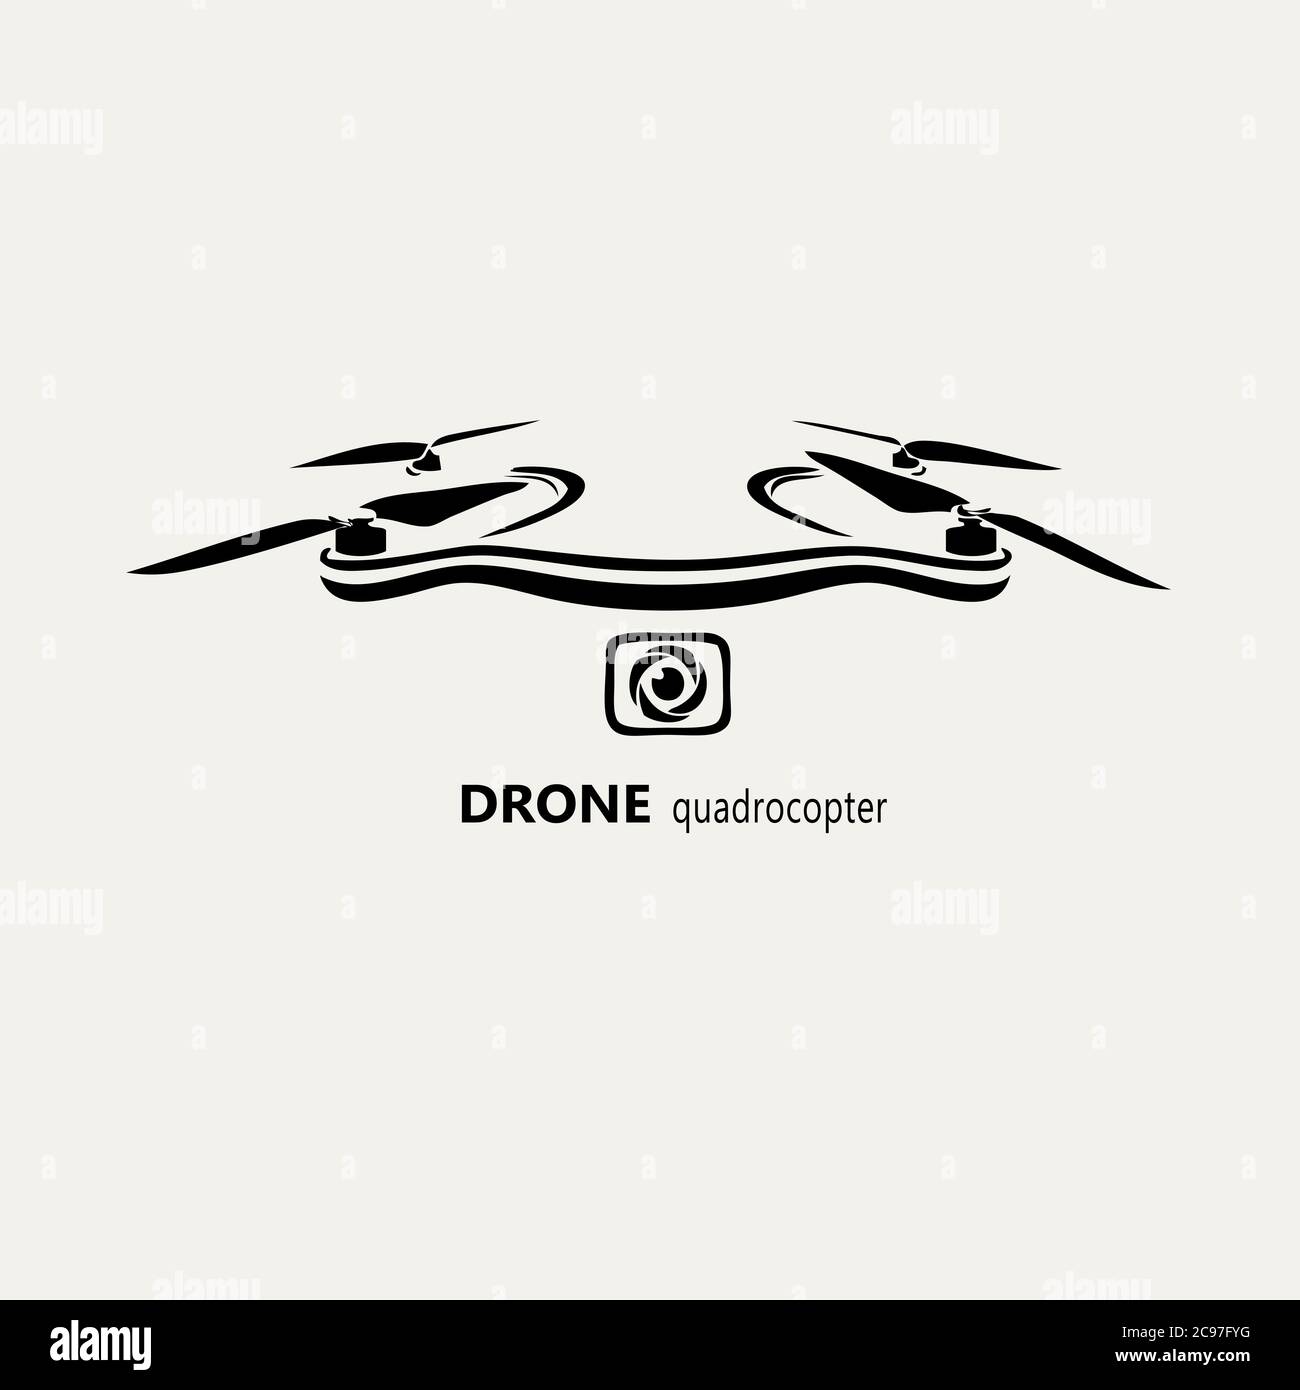 Drone logo camera black and white Stock Photo